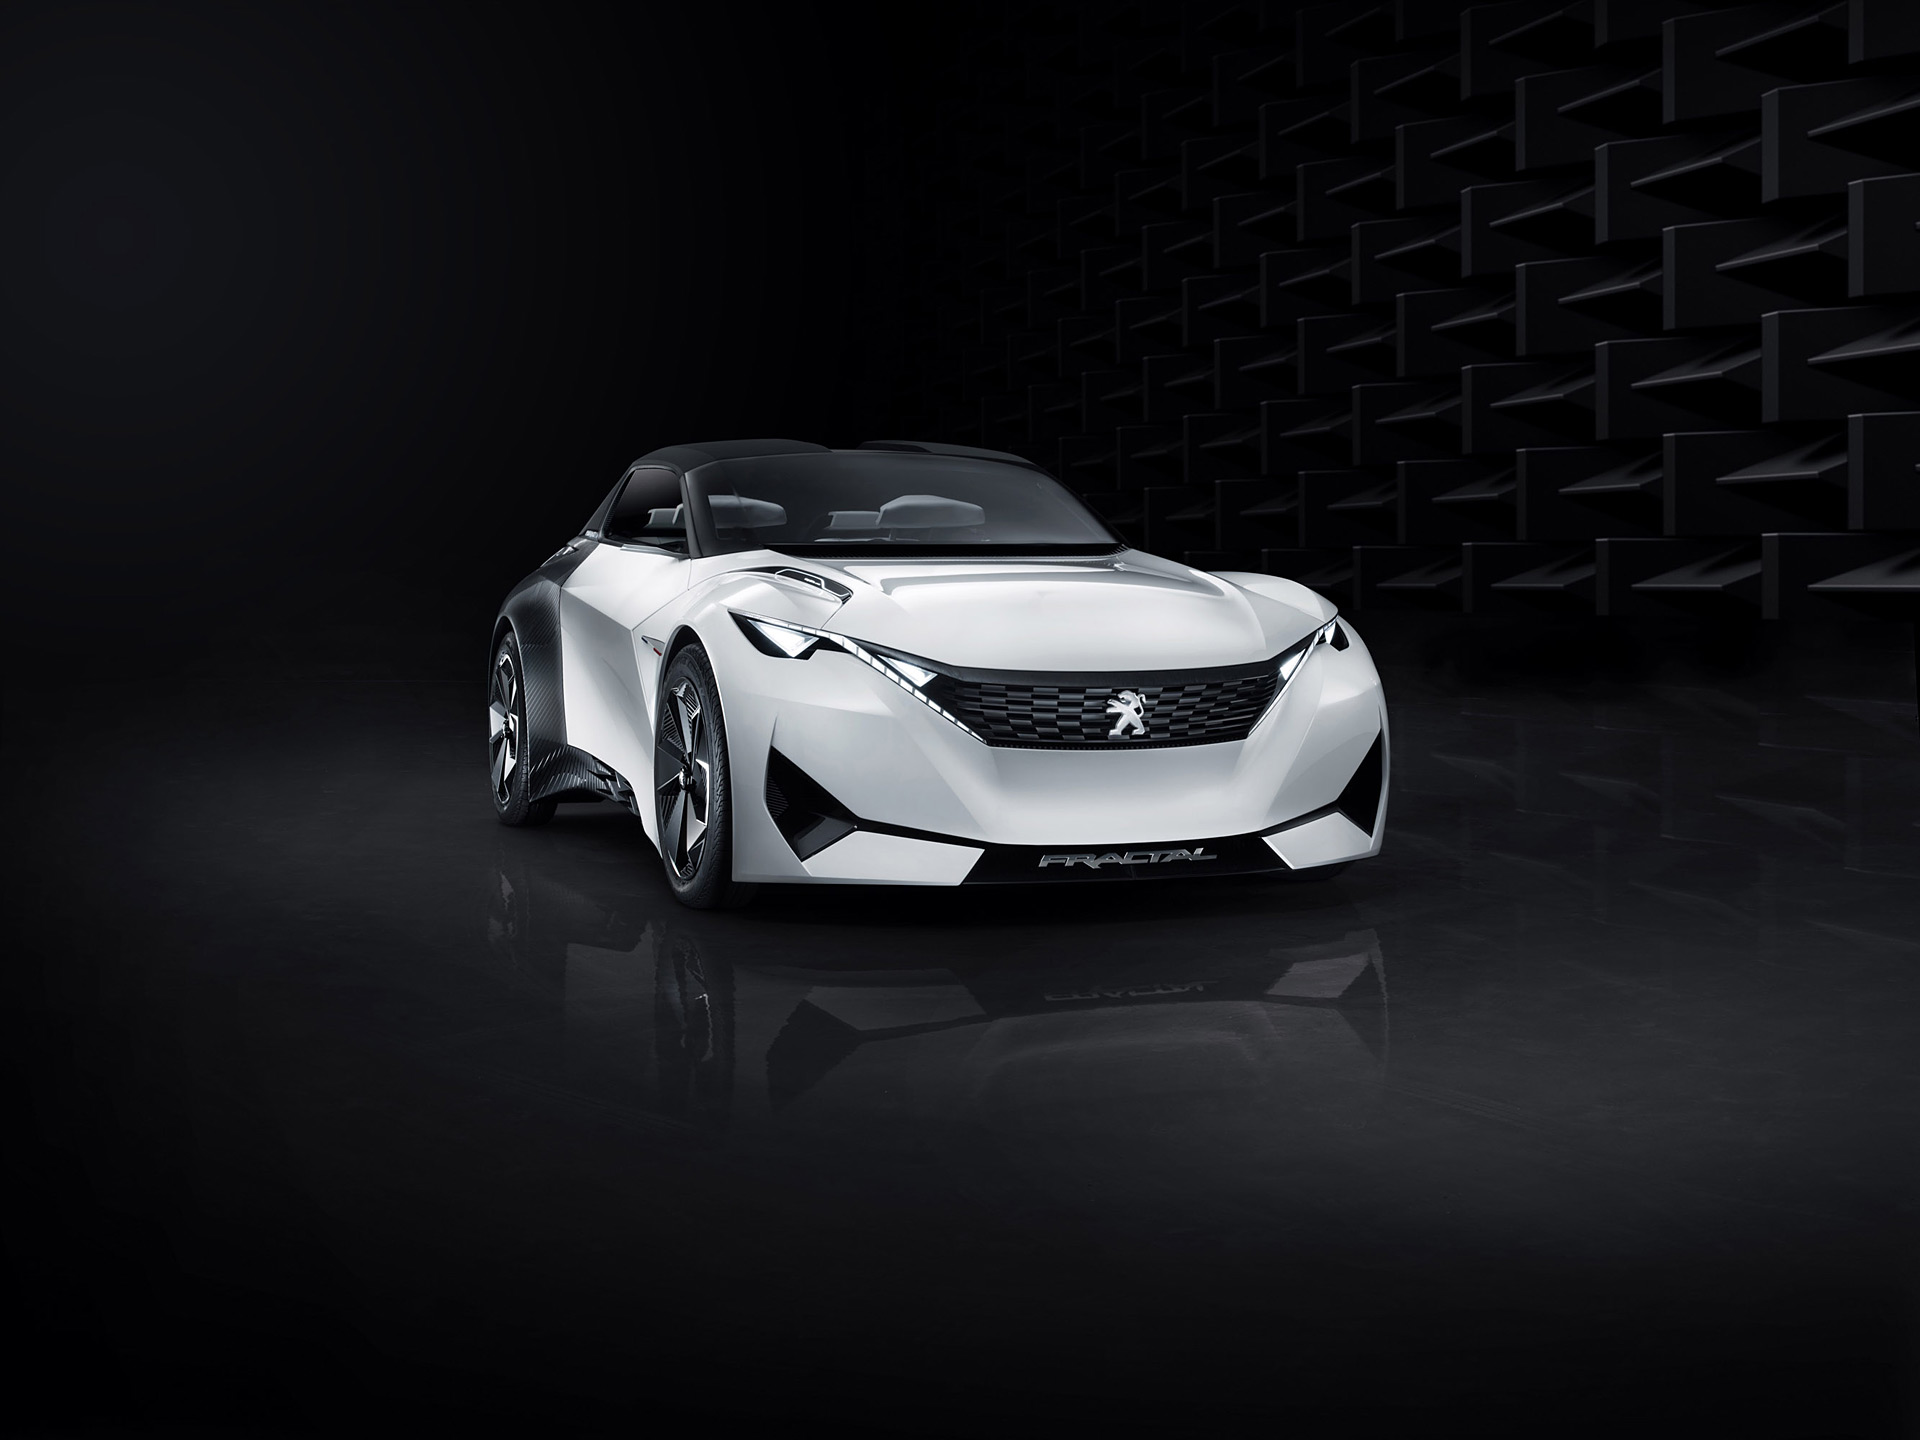  2015 Peugeot Fractal Concept Wallpaper.